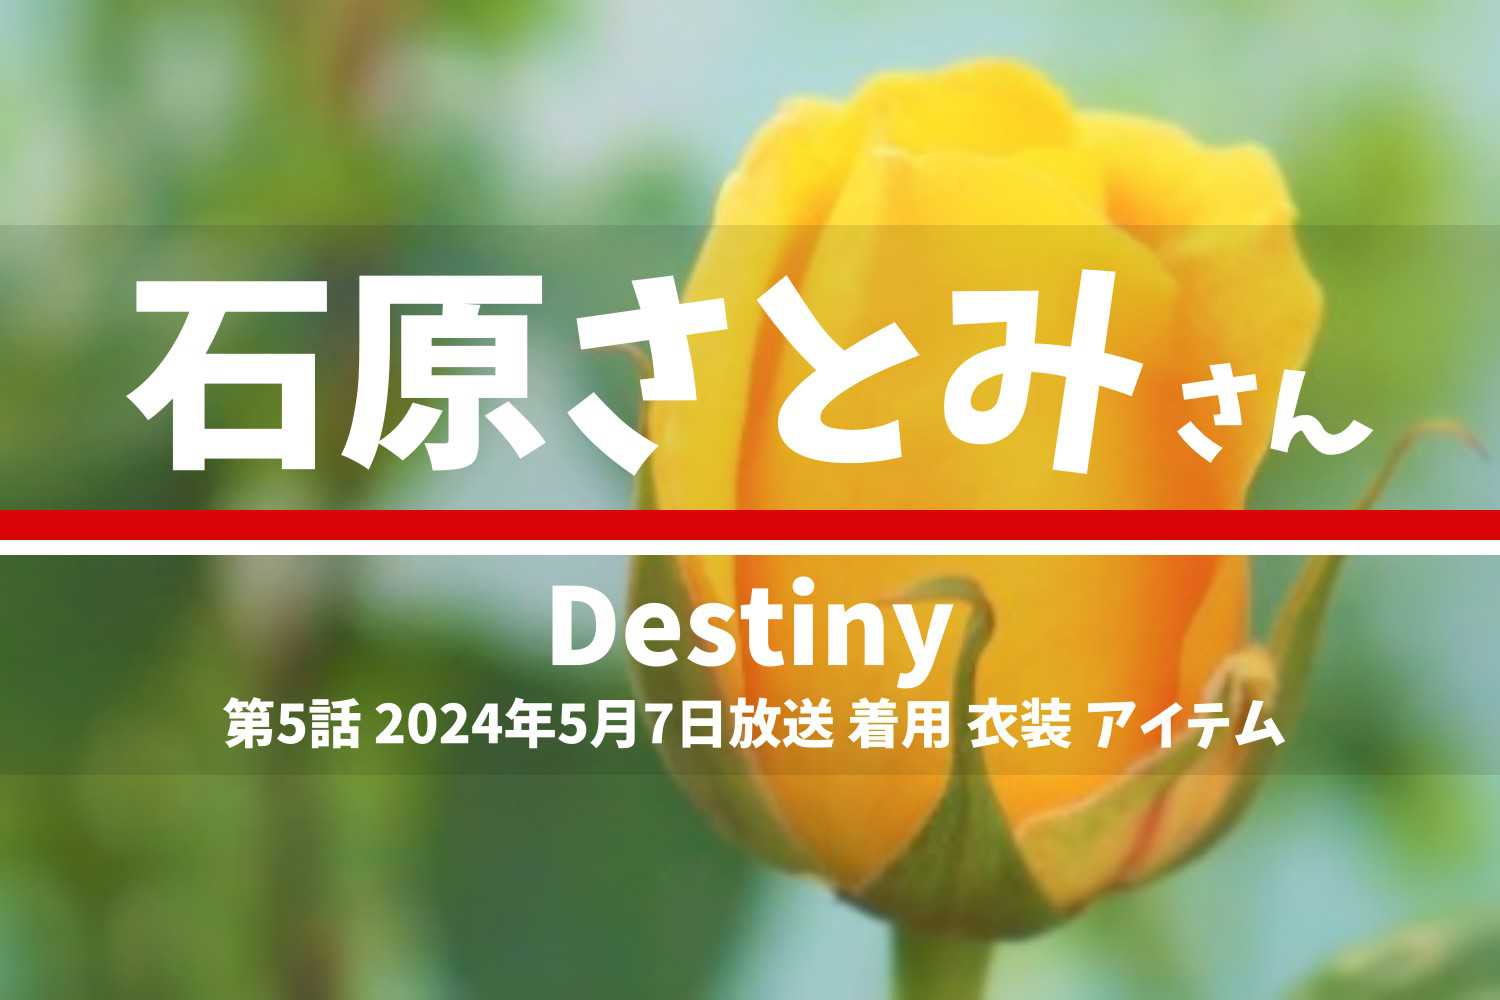 Destiny 石原さとみさん テレビドラマ 衣装 2024年5月6日放送